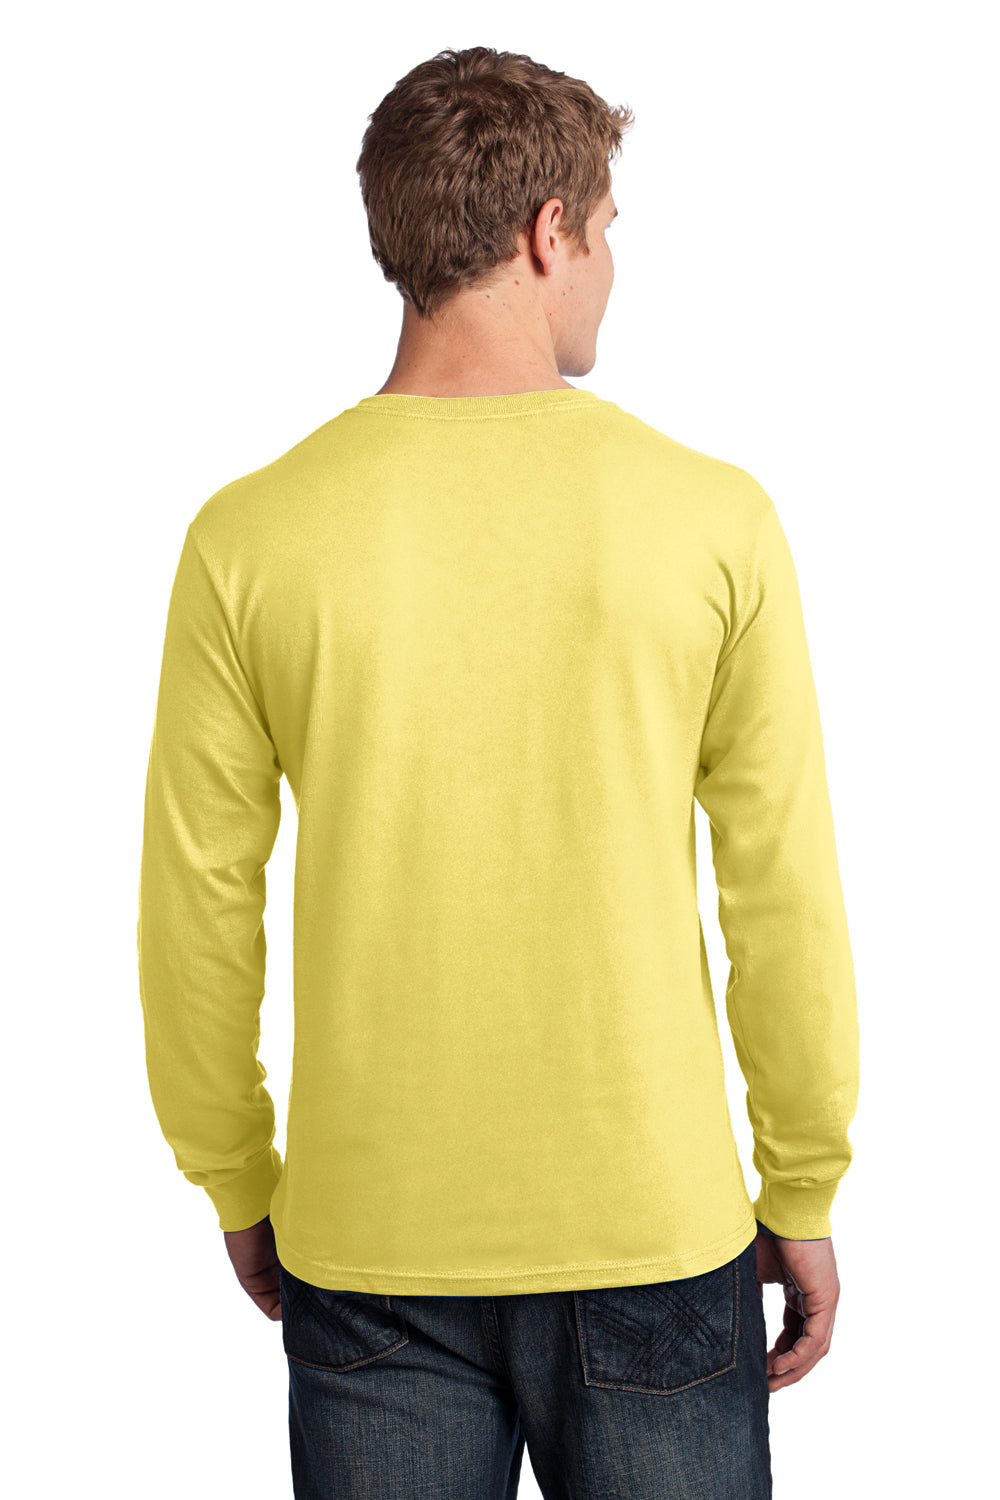 Port & Company PC54LS Mens Core Long Sleeve Crewneck T-Shirt Yellow Back